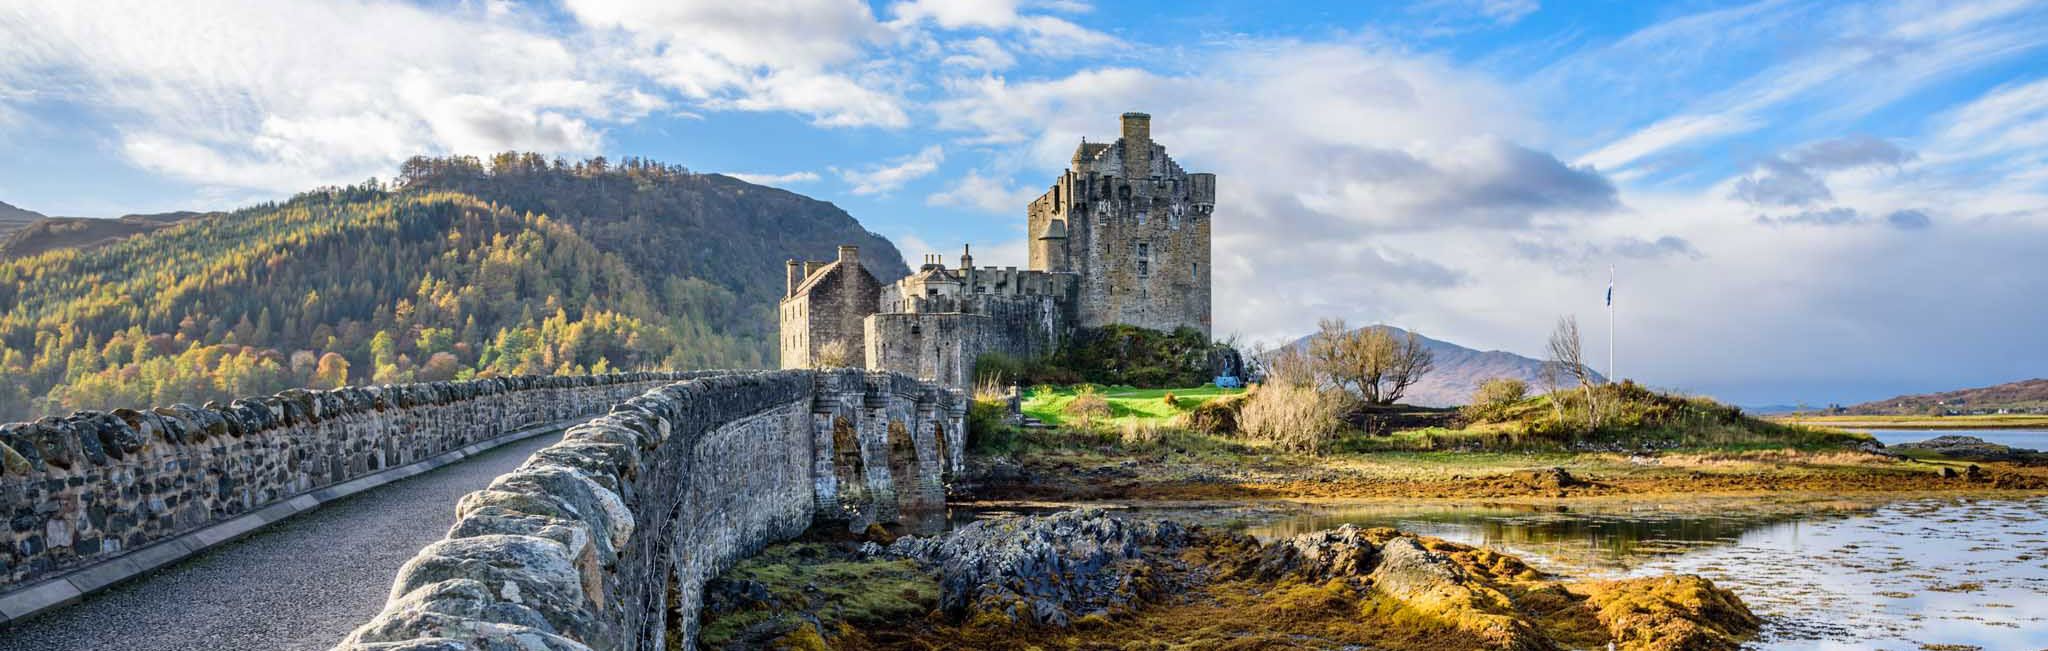 best tours of england ireland and scotland